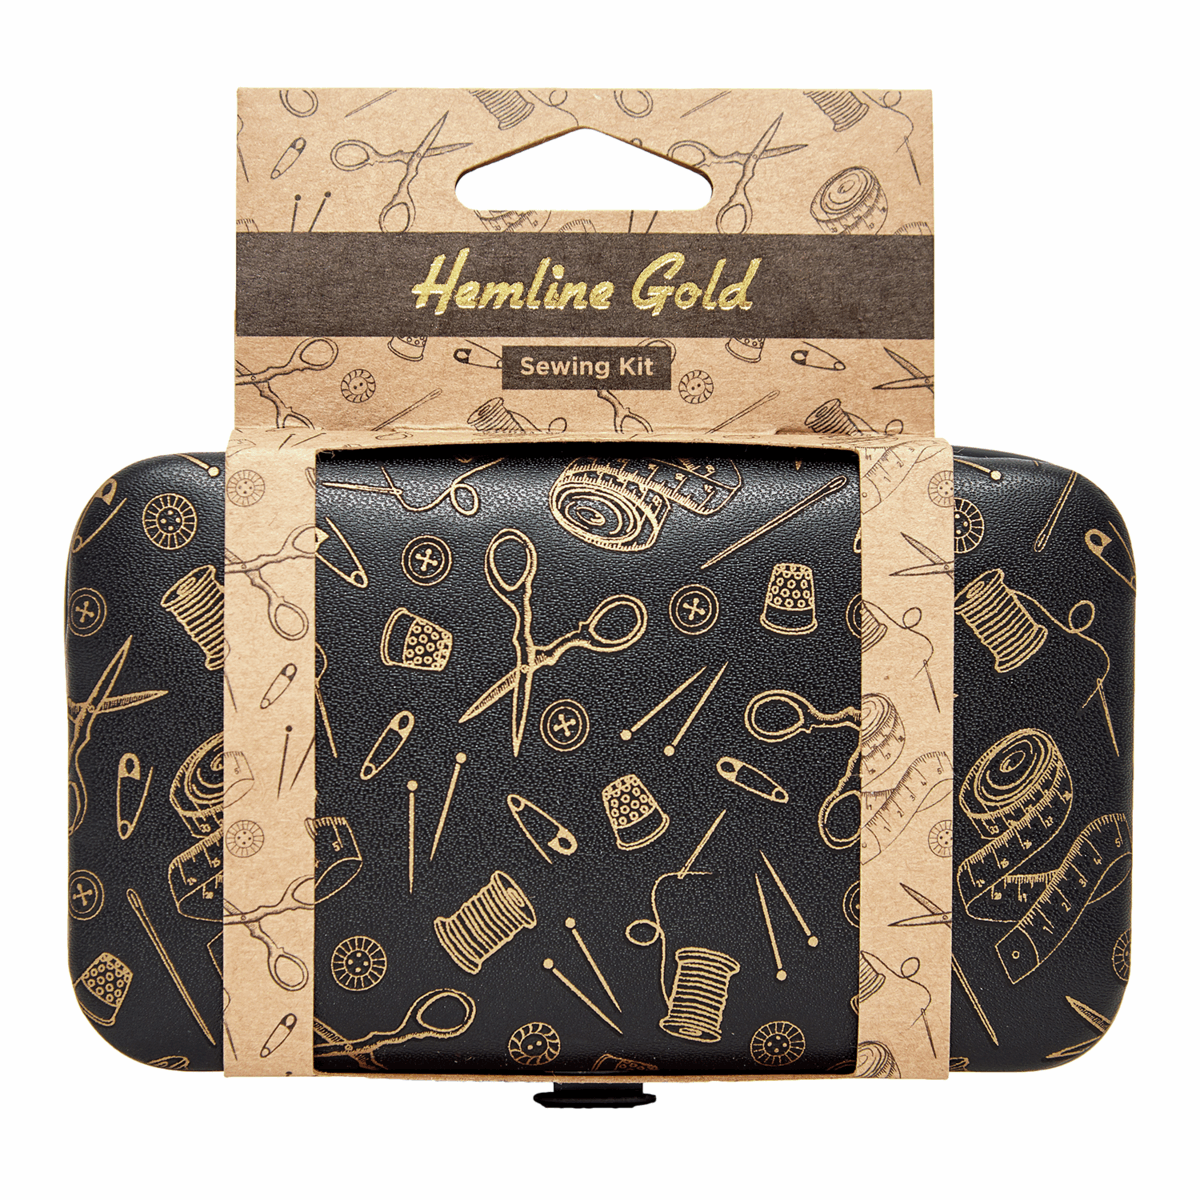 Hemline Gold Travel Sewing Kit